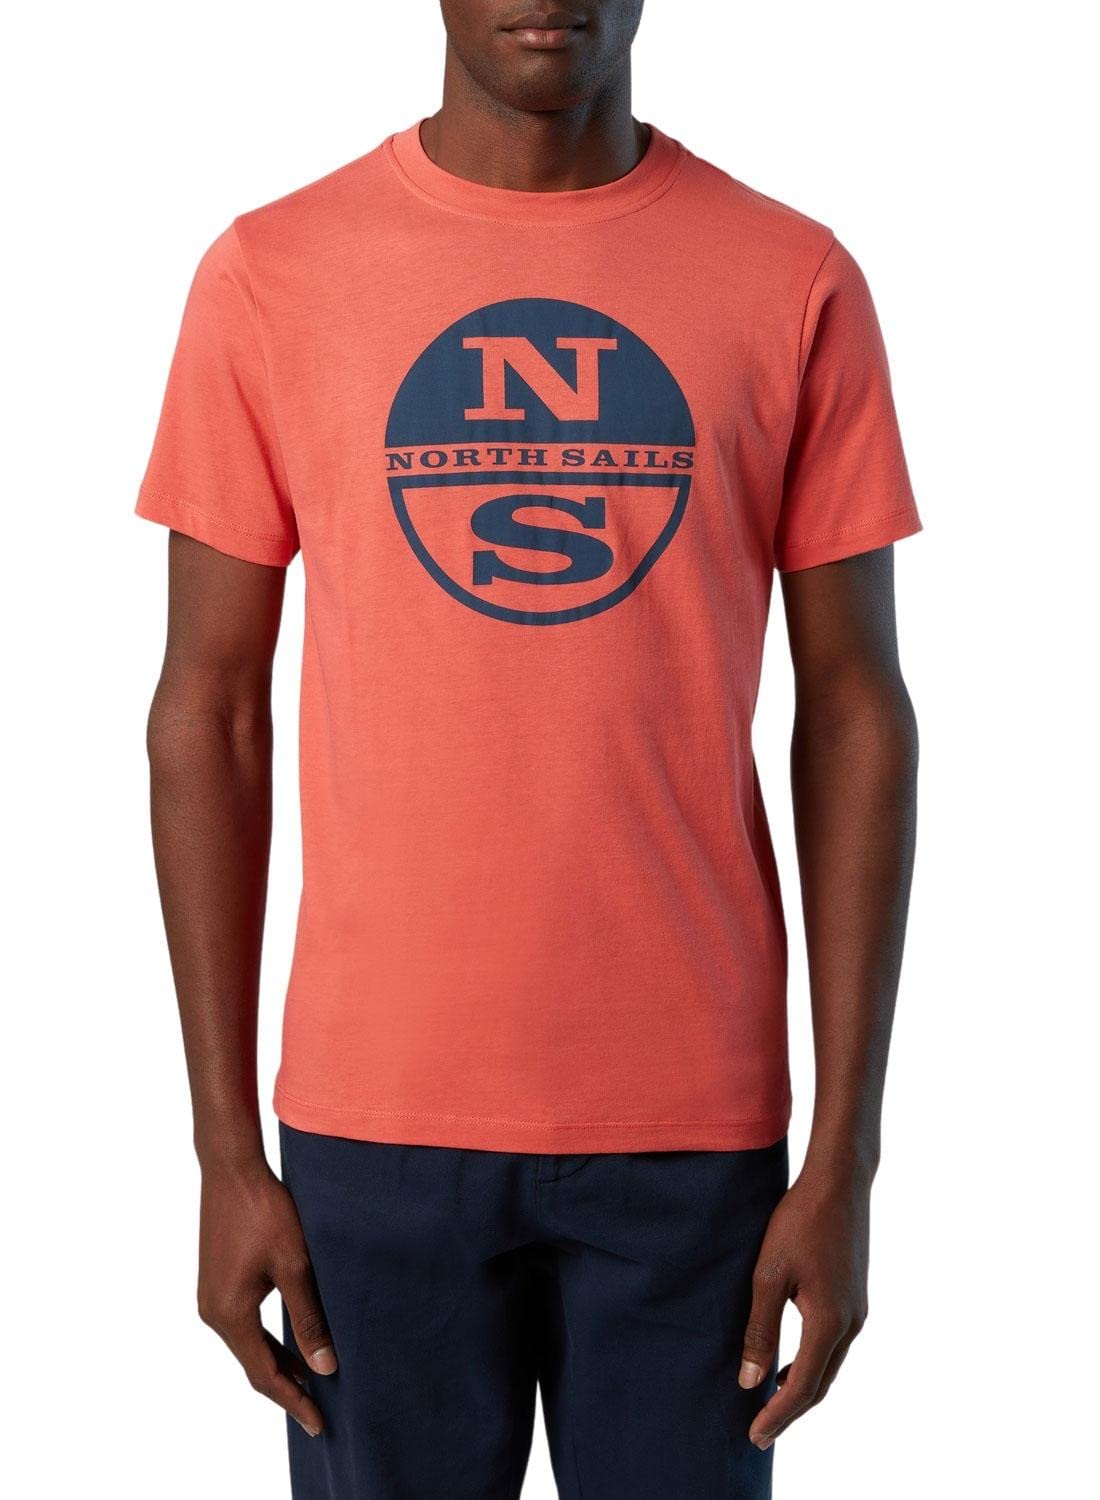 North Sails Graphic 692837 Short Sleeve T-shirt 2XL